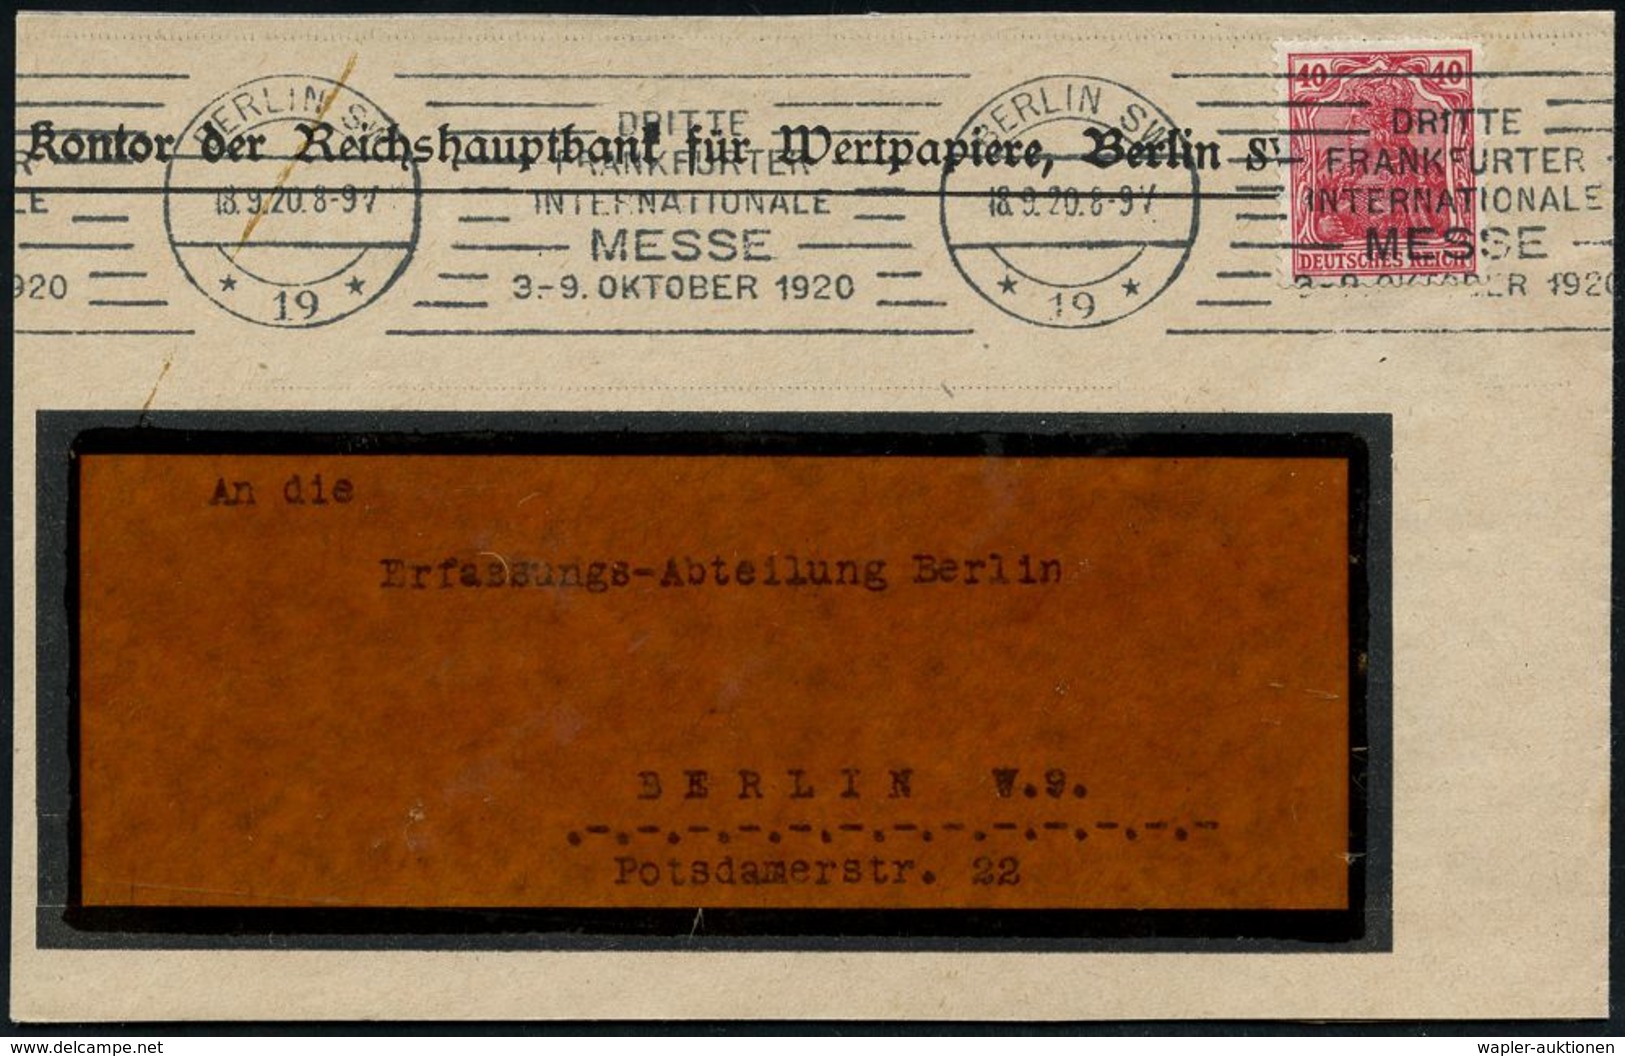 INTERNATIONALE FRANKFURTER MESSE (F.I.M.) : BERLIN SW/ *19*/ DRITTE/ FRANKFURTER/ INTERNAT./ MESSE/ 3.-9.OKT. 1920 (18.9 - Non Classés